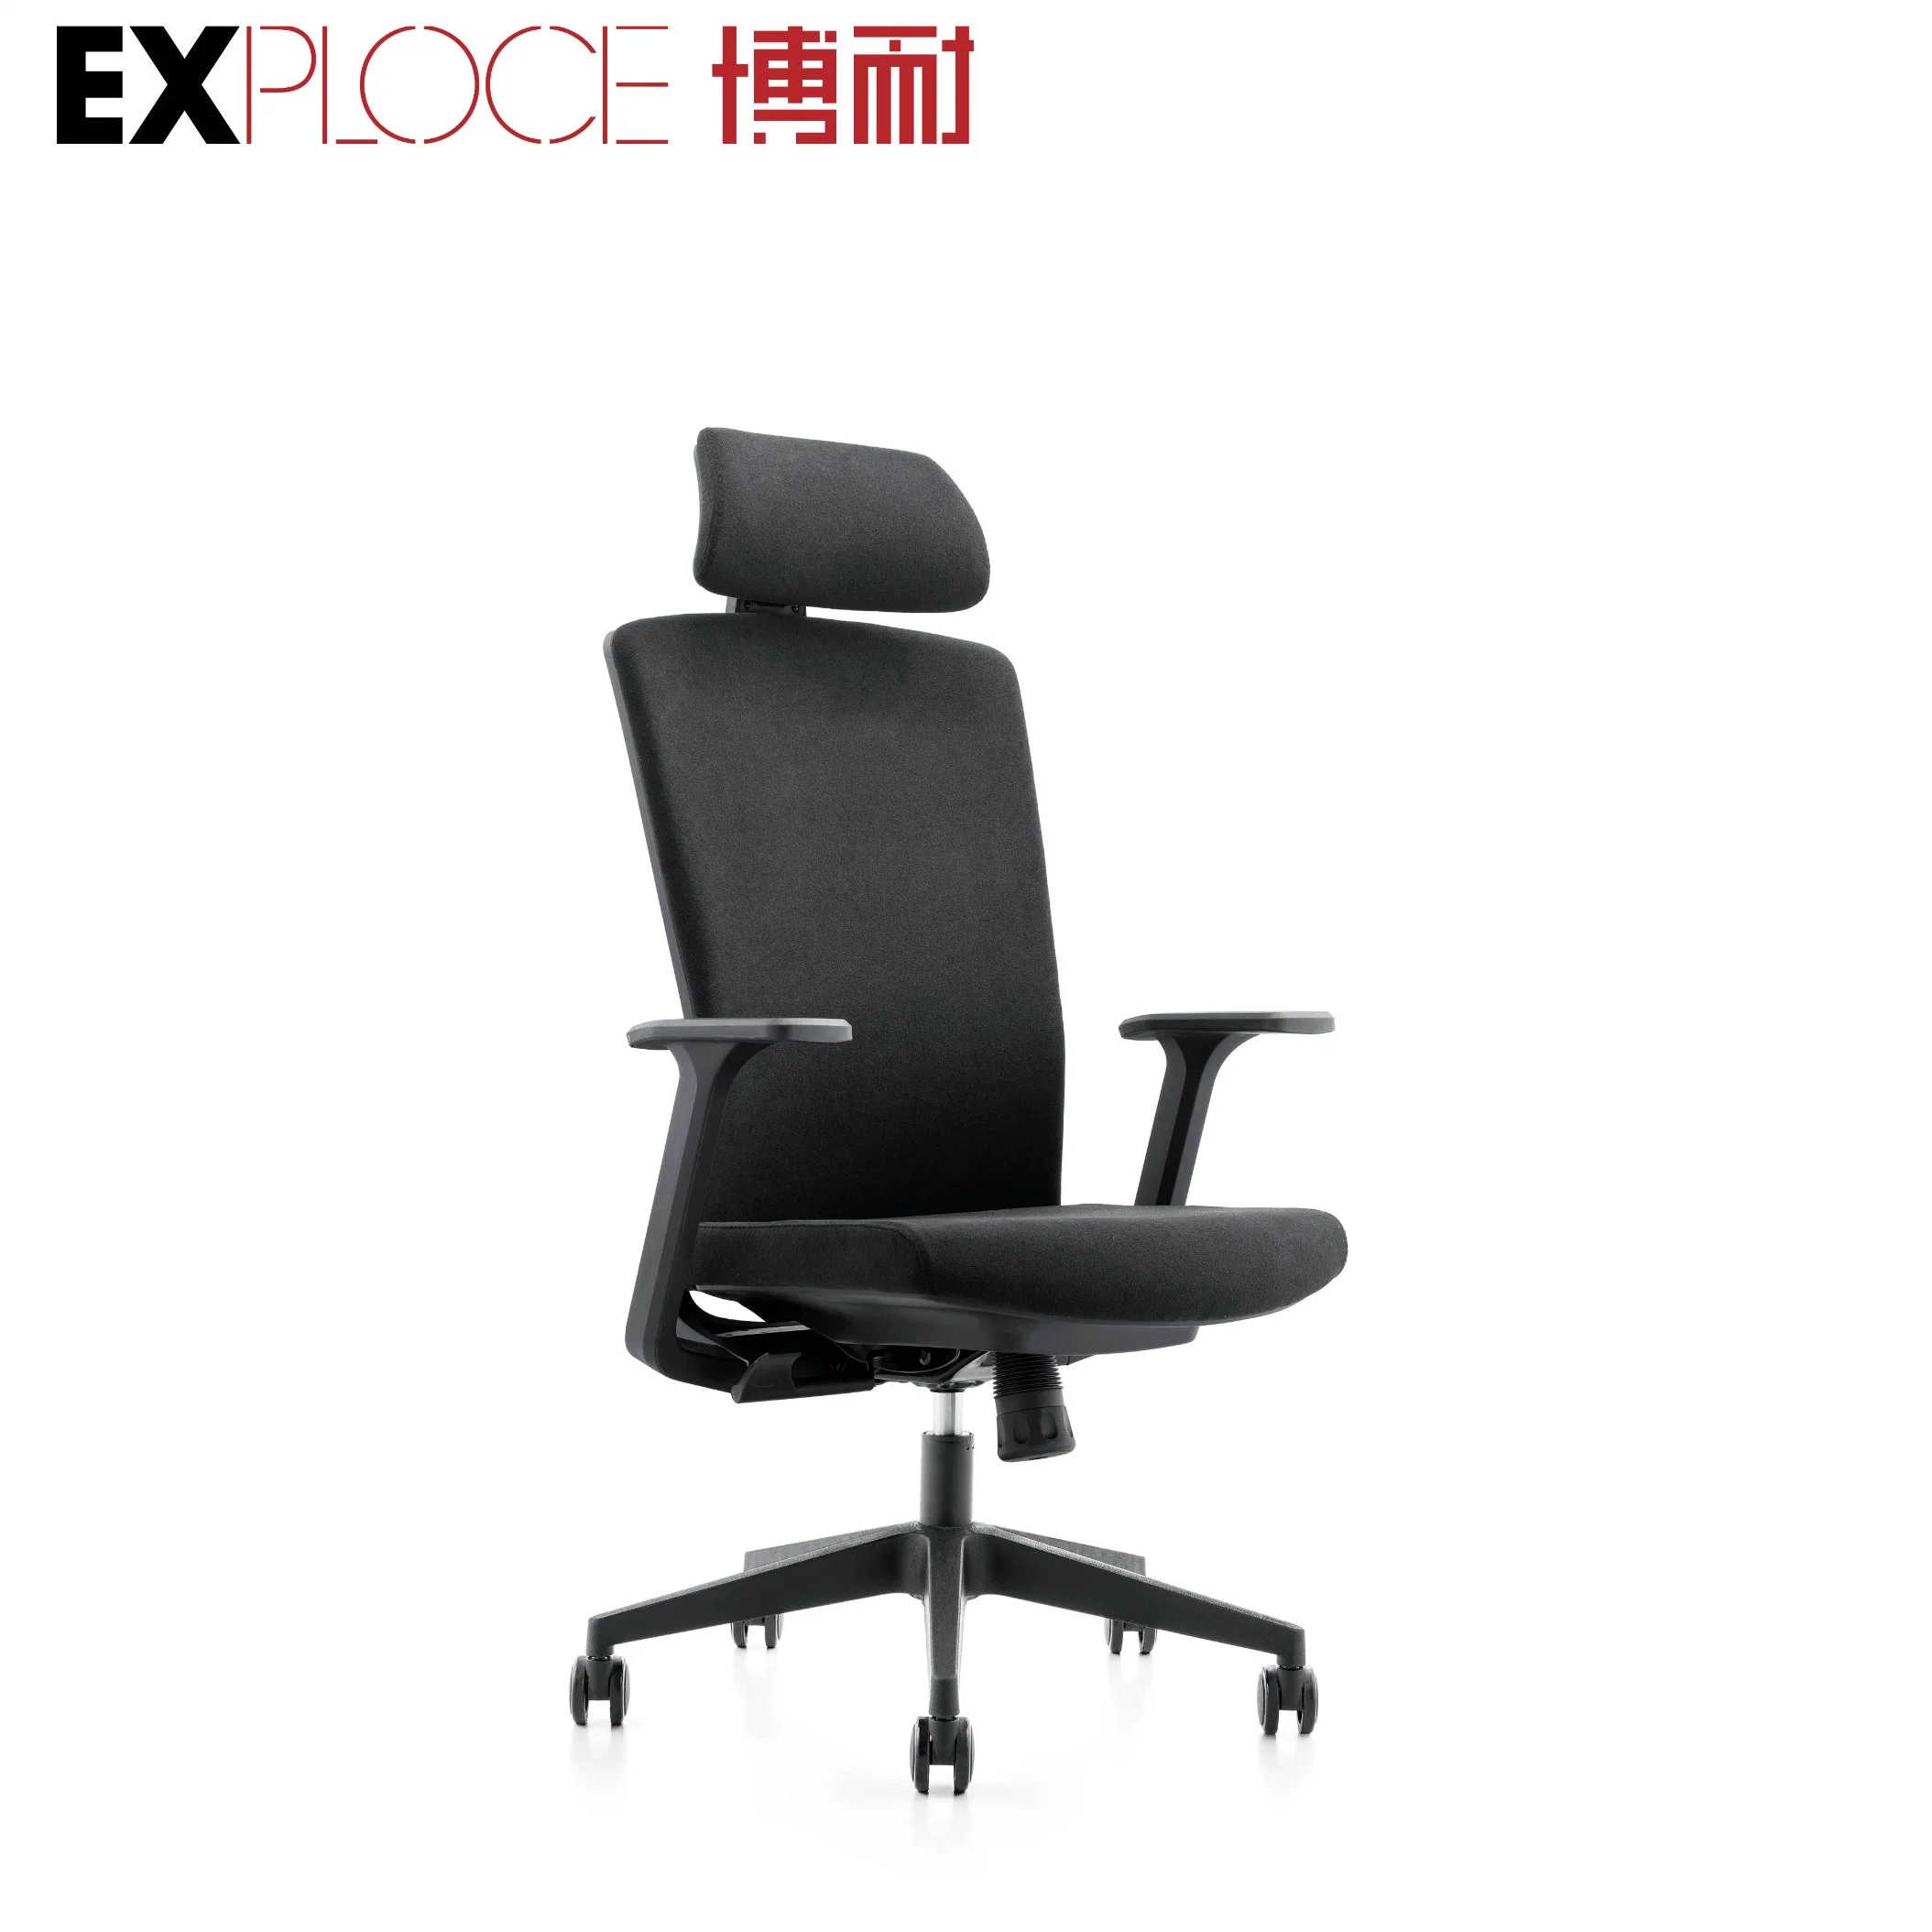 Modern Design Executive Meeting Laptop Table Ergonomic Chair Hot Sale Swivel Mesh Office Chairs